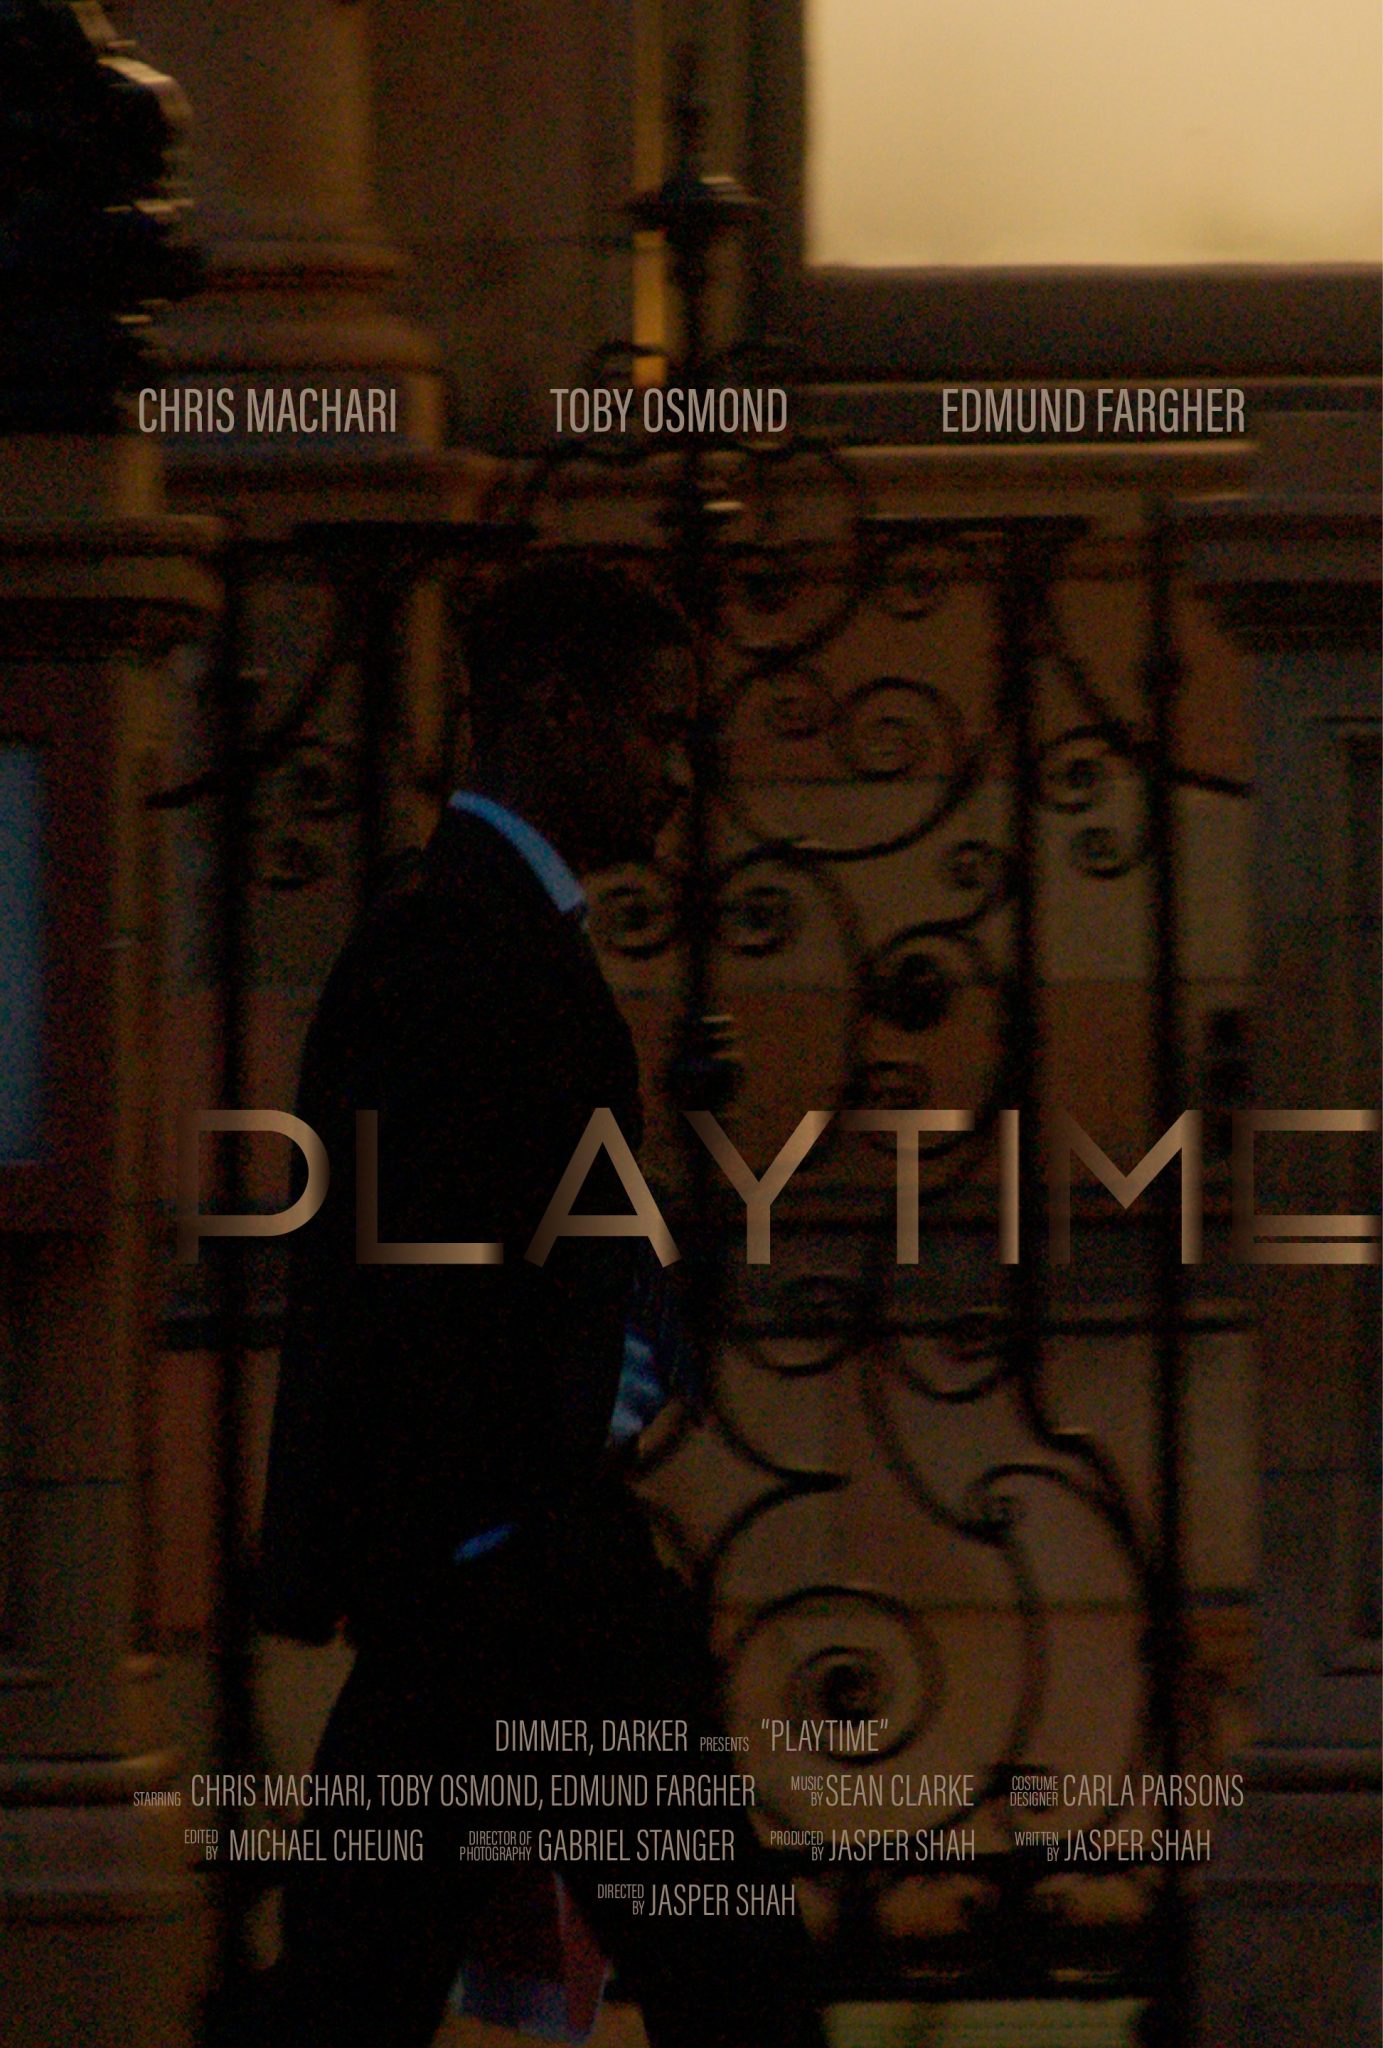 Playtime a short film by Jasper Shah